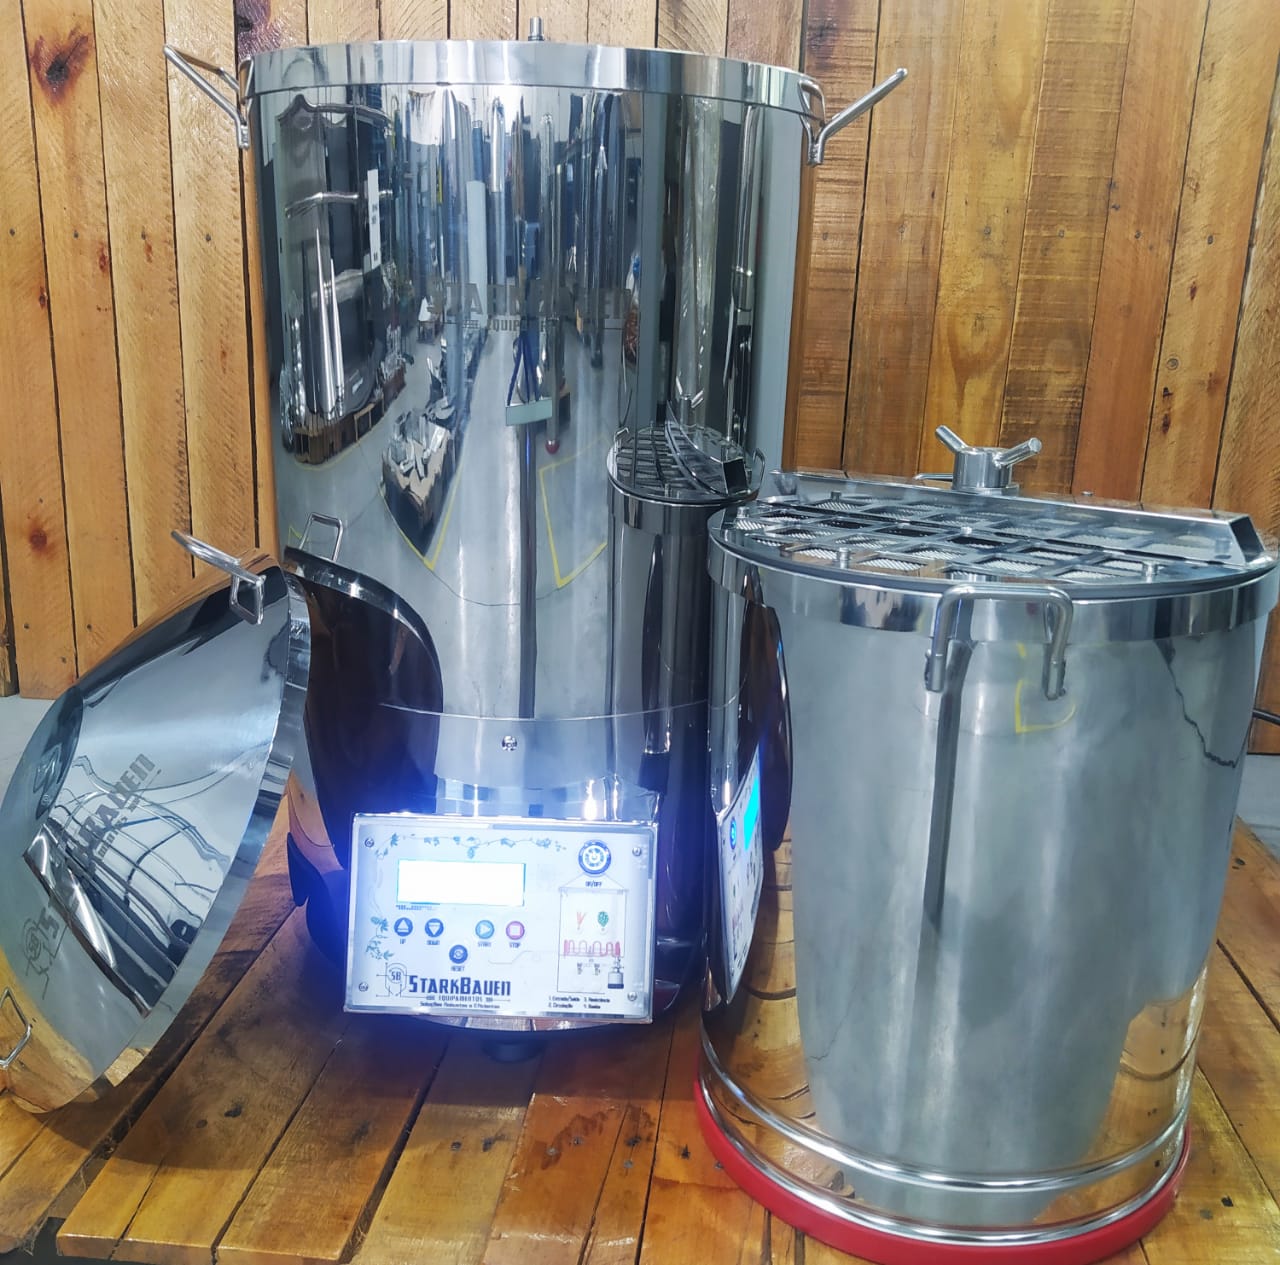 StarkBauen Brewing Equipment